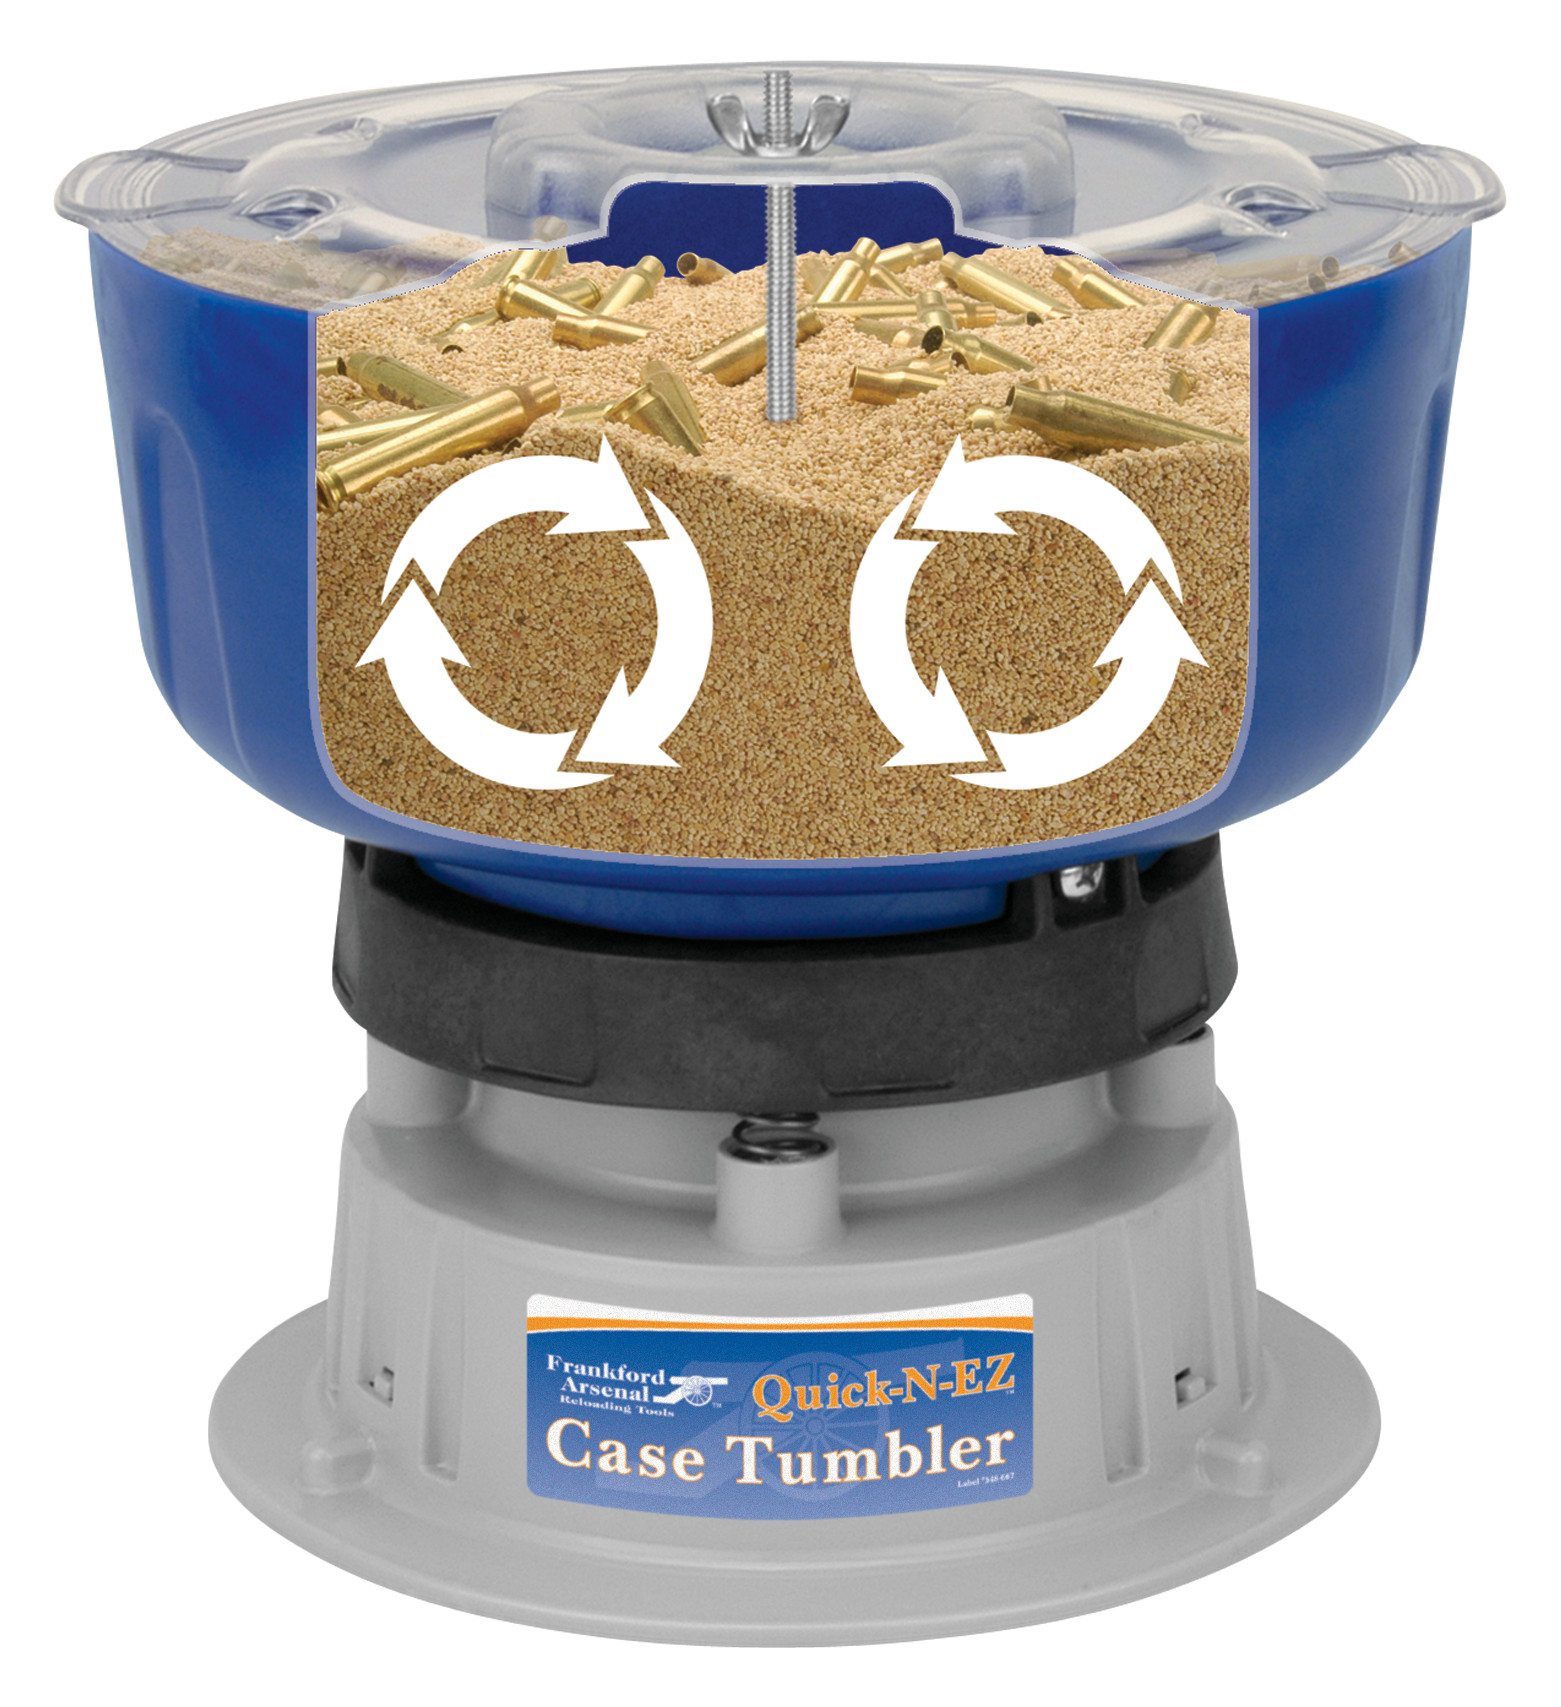 Large case tumbler by Dillon.